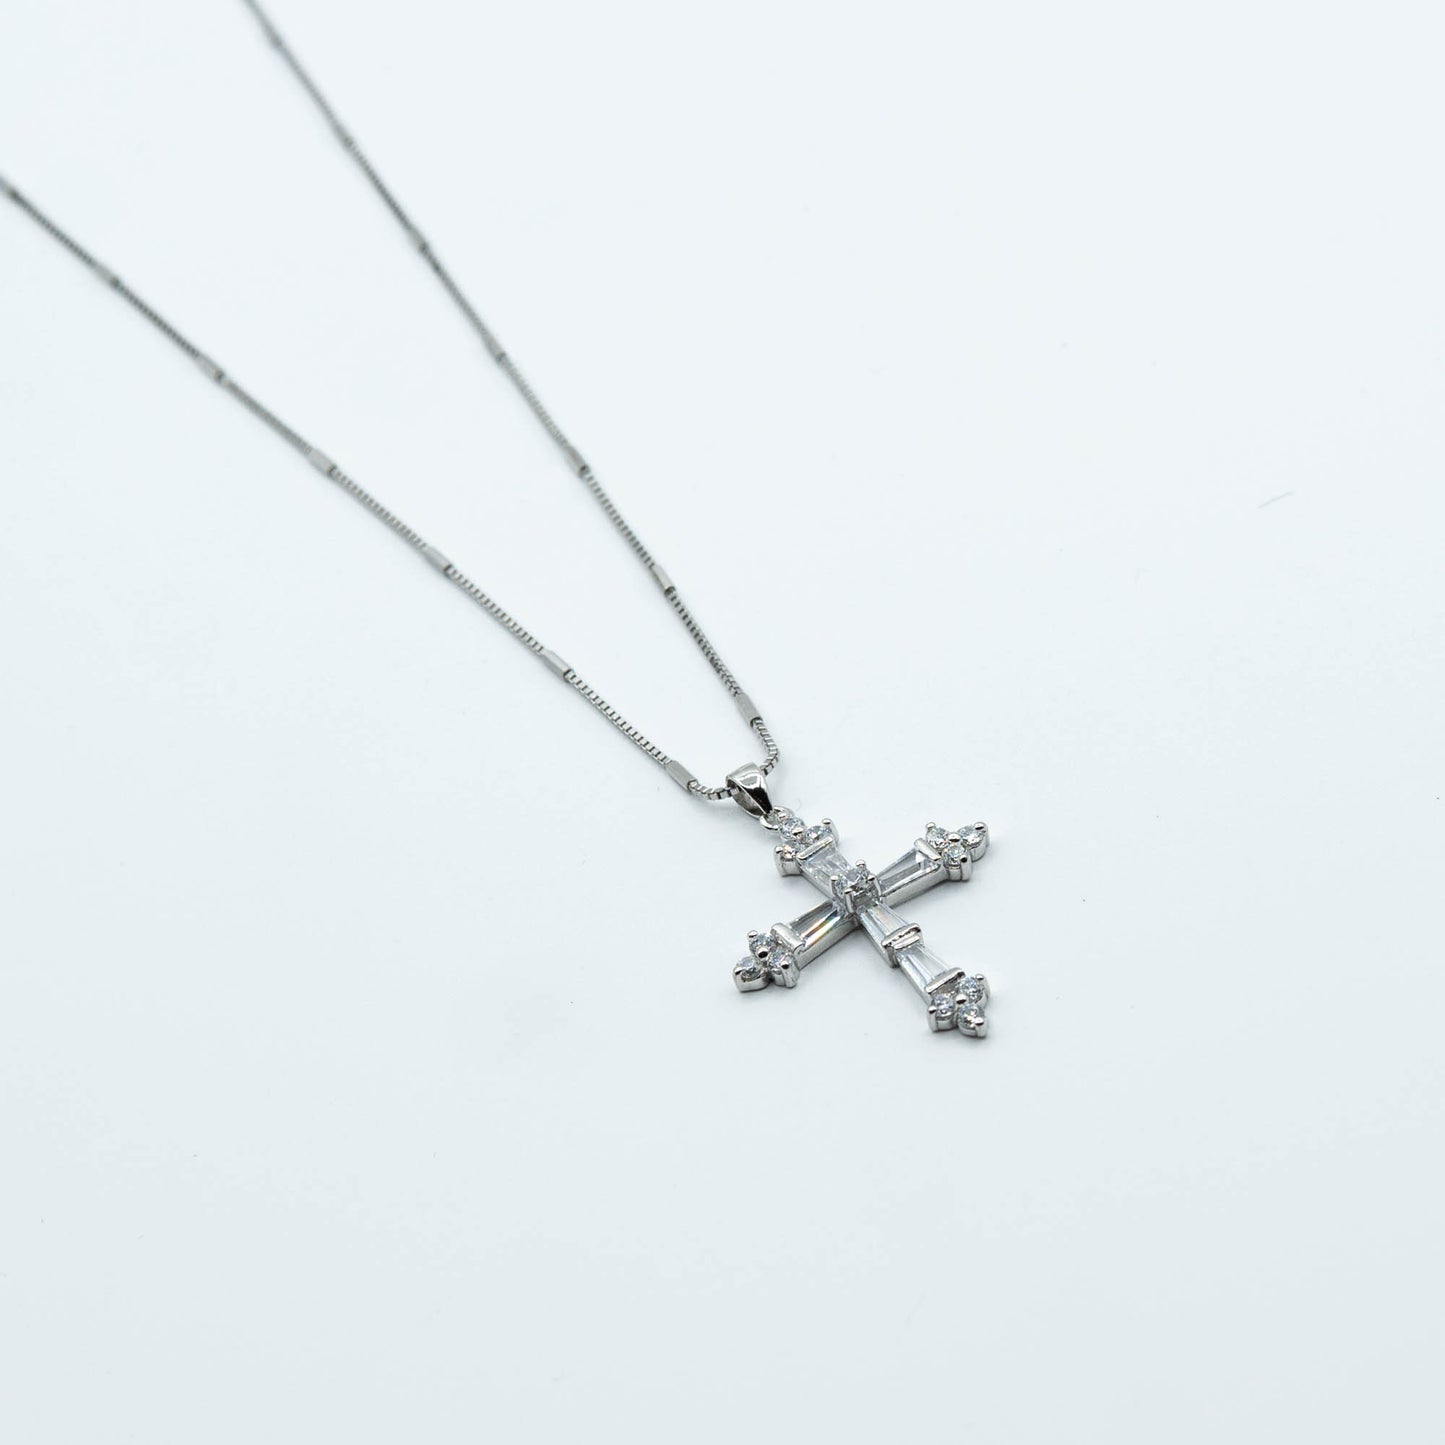 DK-925-439 Sterling silver cross necklace